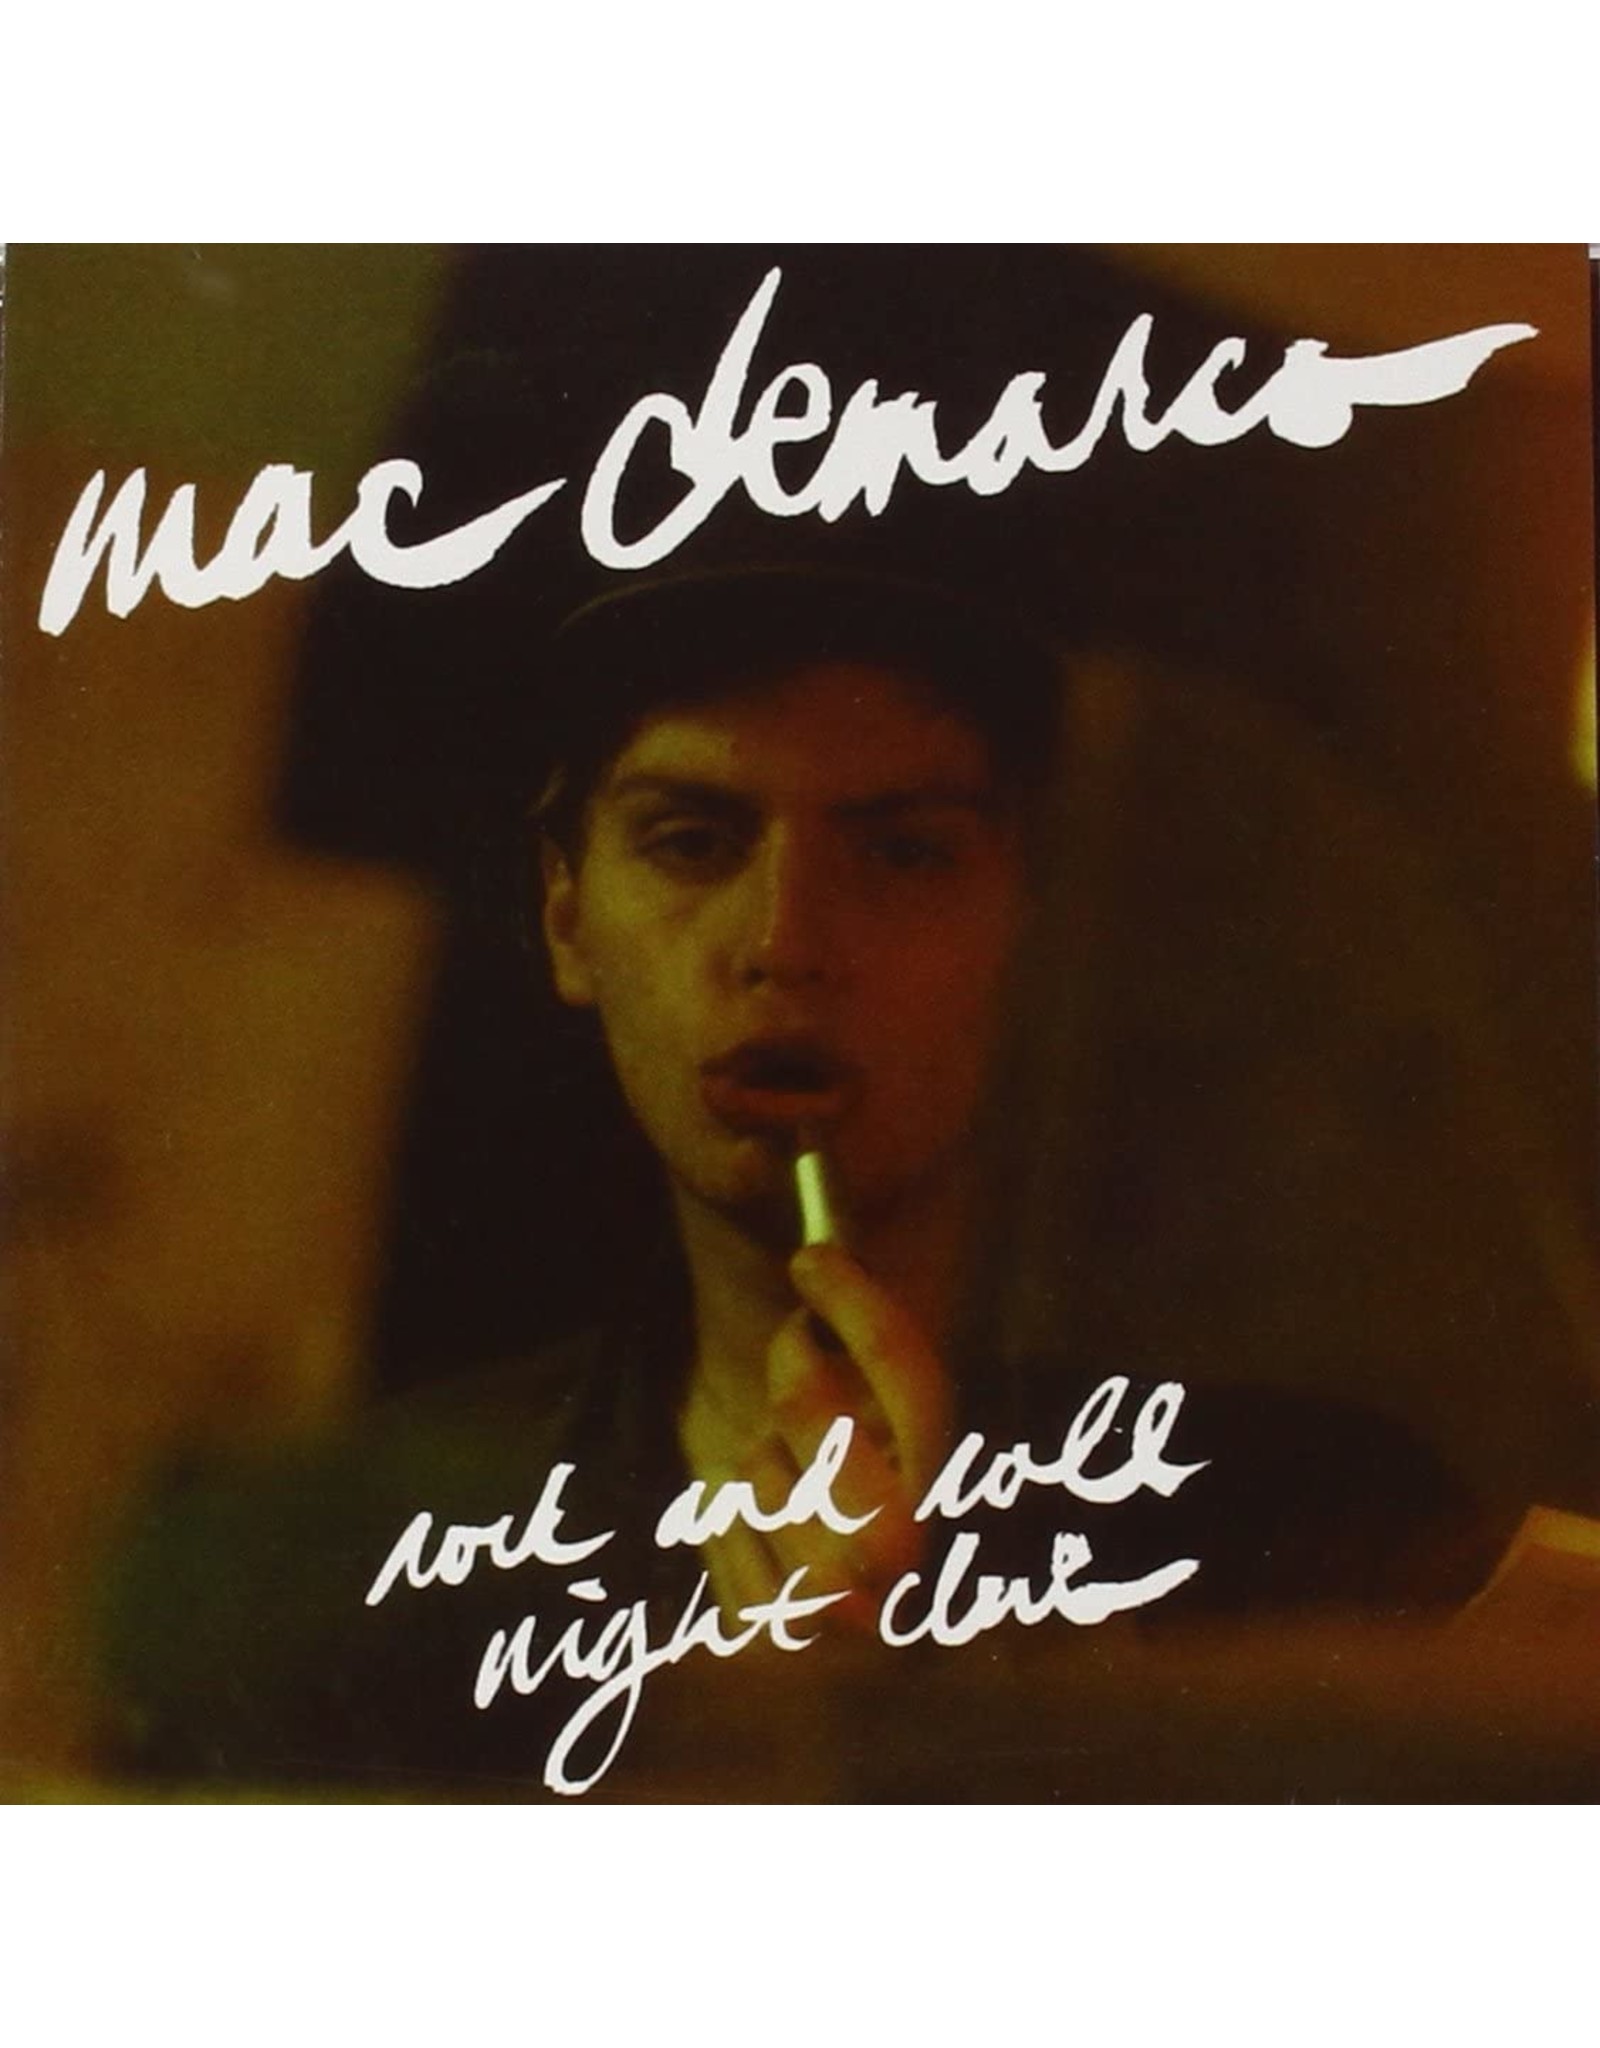 Mac DeMarco - Rock and Roll Night Club (10th Anniversary) [Brown Custard Vinyl]